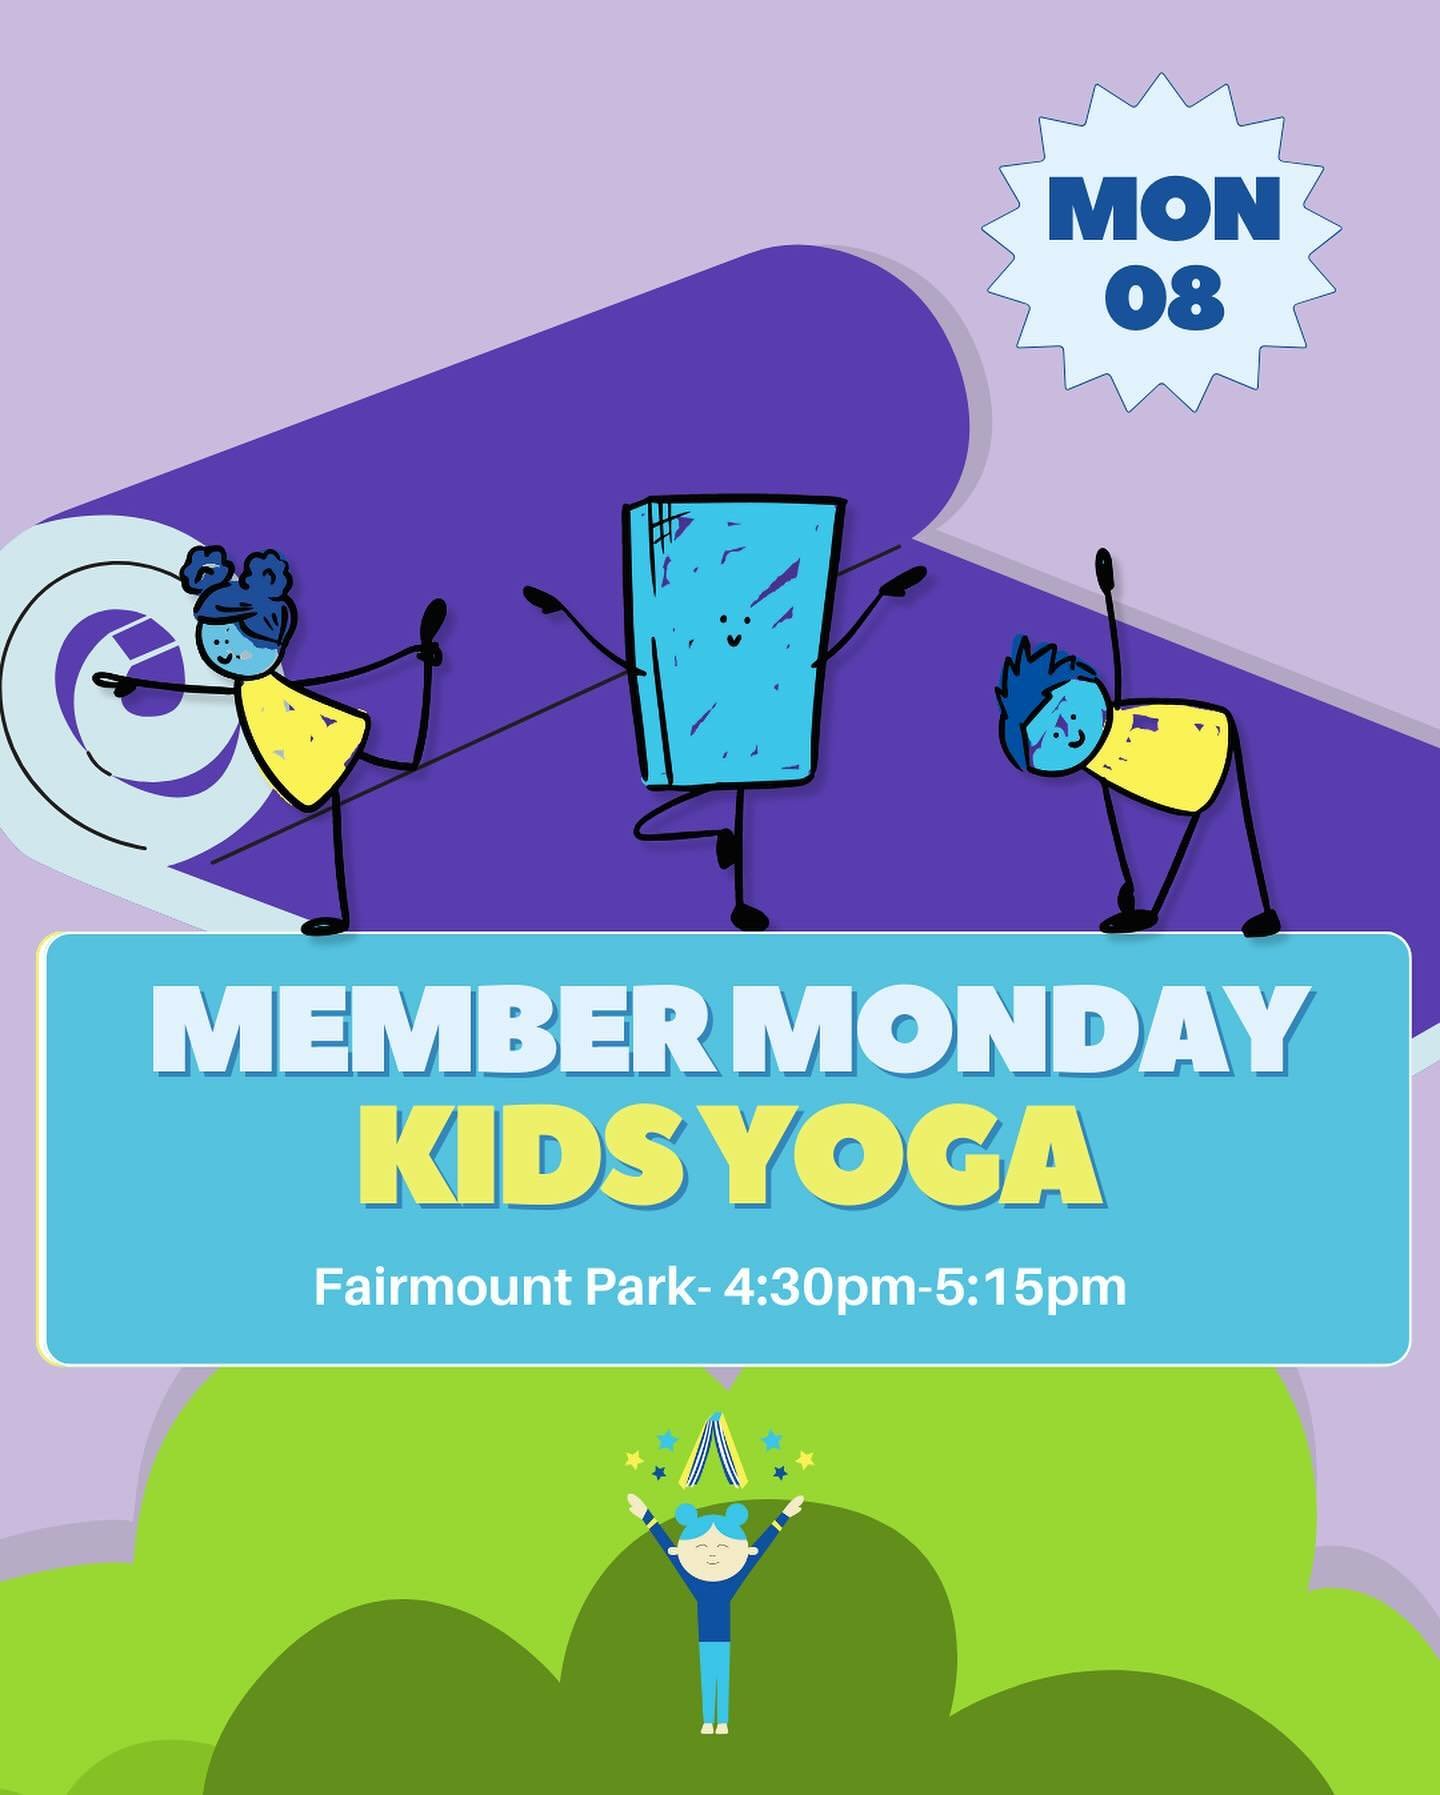 ✌️THIS WEEK!! Come join us! 🤓

🍄 Member Mondays Kids Yoga:
Today @ 4:30pm-5:15pm - Fairmount Park

🦋Yogi Tots:
Tue. 4/9 @ 10am-10:30am - Fairmount Community Library

🐛 Yoga w/ the Dream Club:
Fri. 4/12 @ 3pm-4pm - Thomas Place Community Center 

